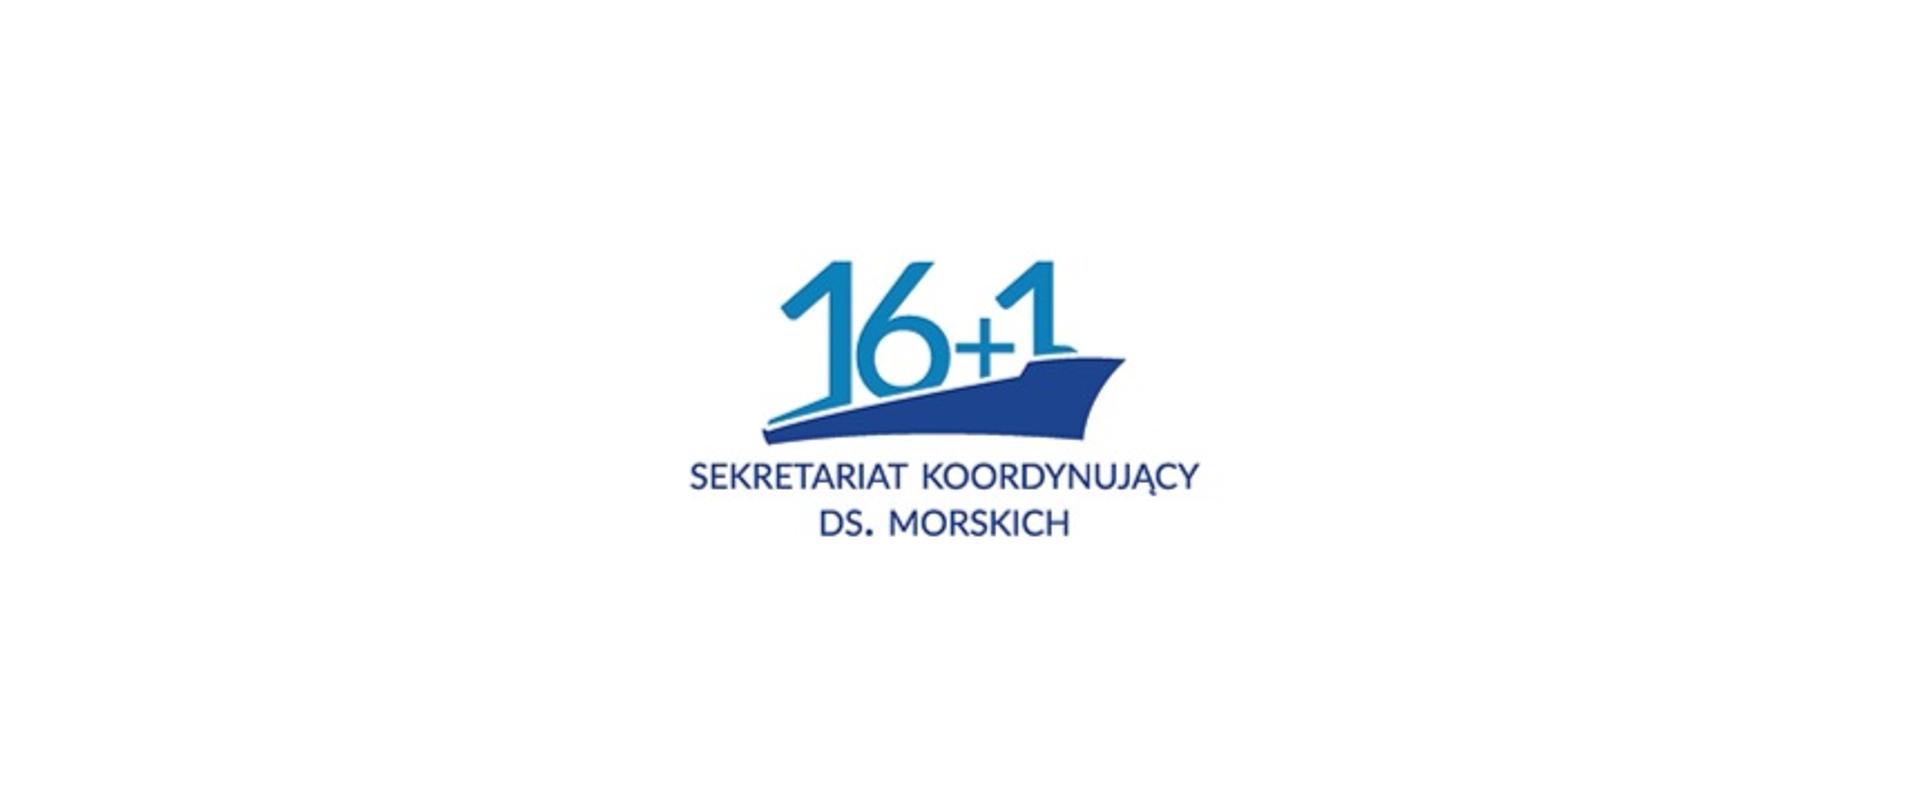 Sekretariat Koordynujący ds. Morskich „16+1”